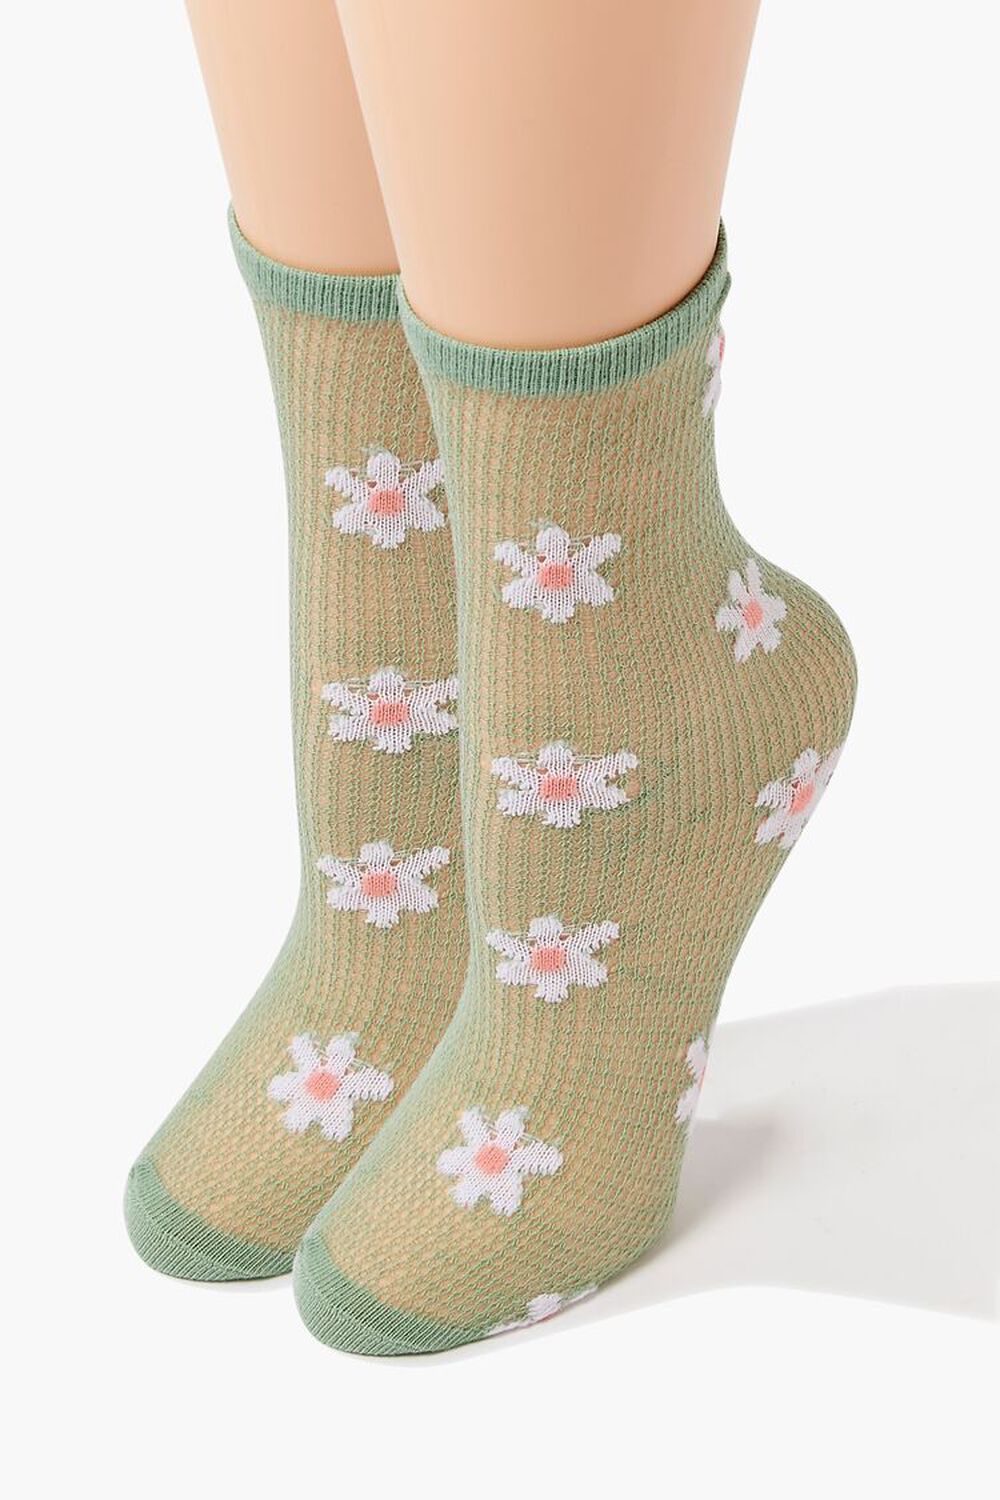 GREEN/MULTI Floral Print Open-Knit Crew Socks, image 1